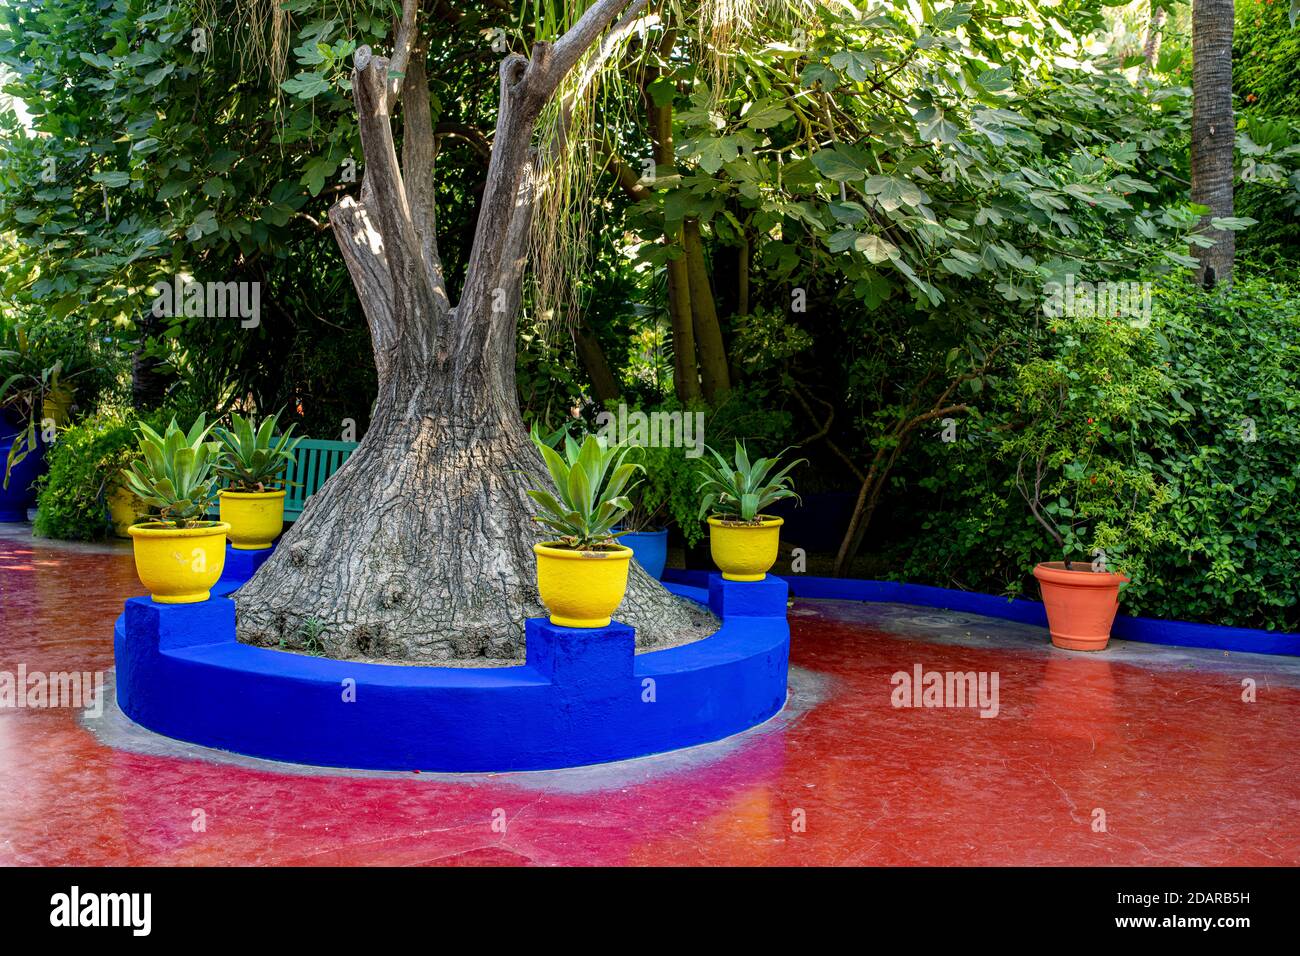 Dettaglio, Jardin Majorelle con la casa blu di Yves Saint-Laurent, giardino botanico, Marrakech, Marocco Foto Stock